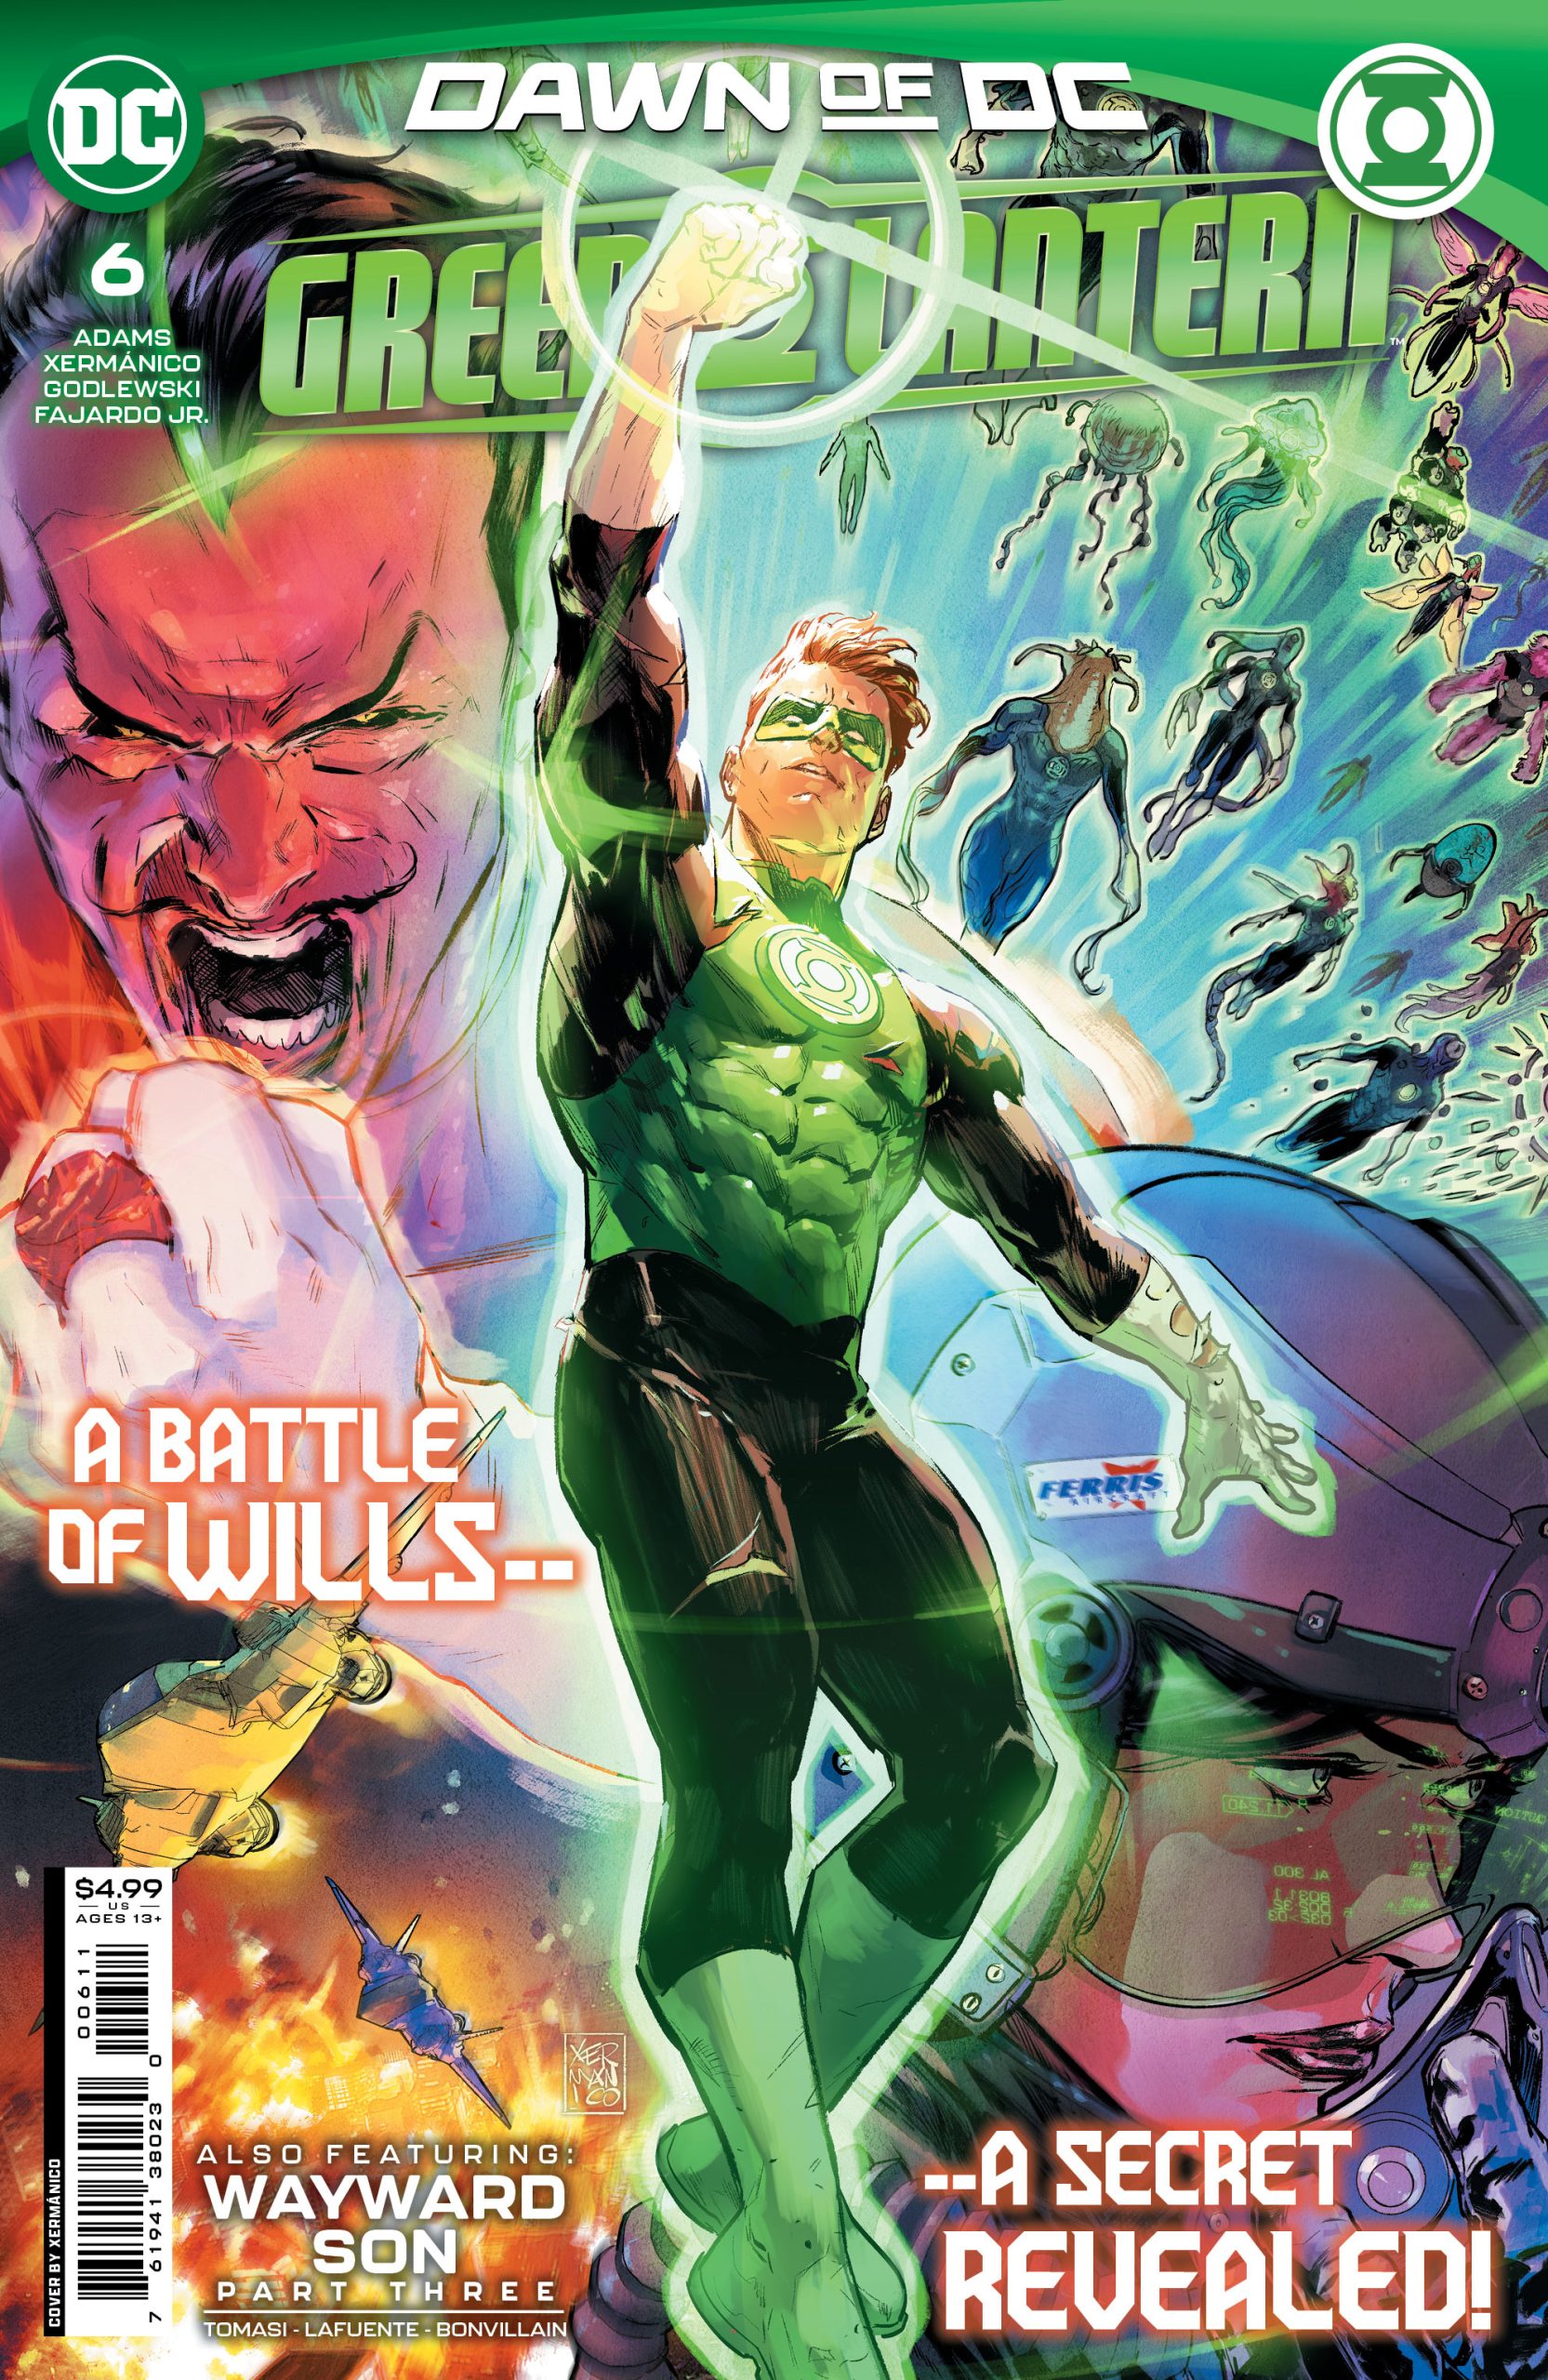 Weird Science DC Comics: RWBY/Justice League #6 Review